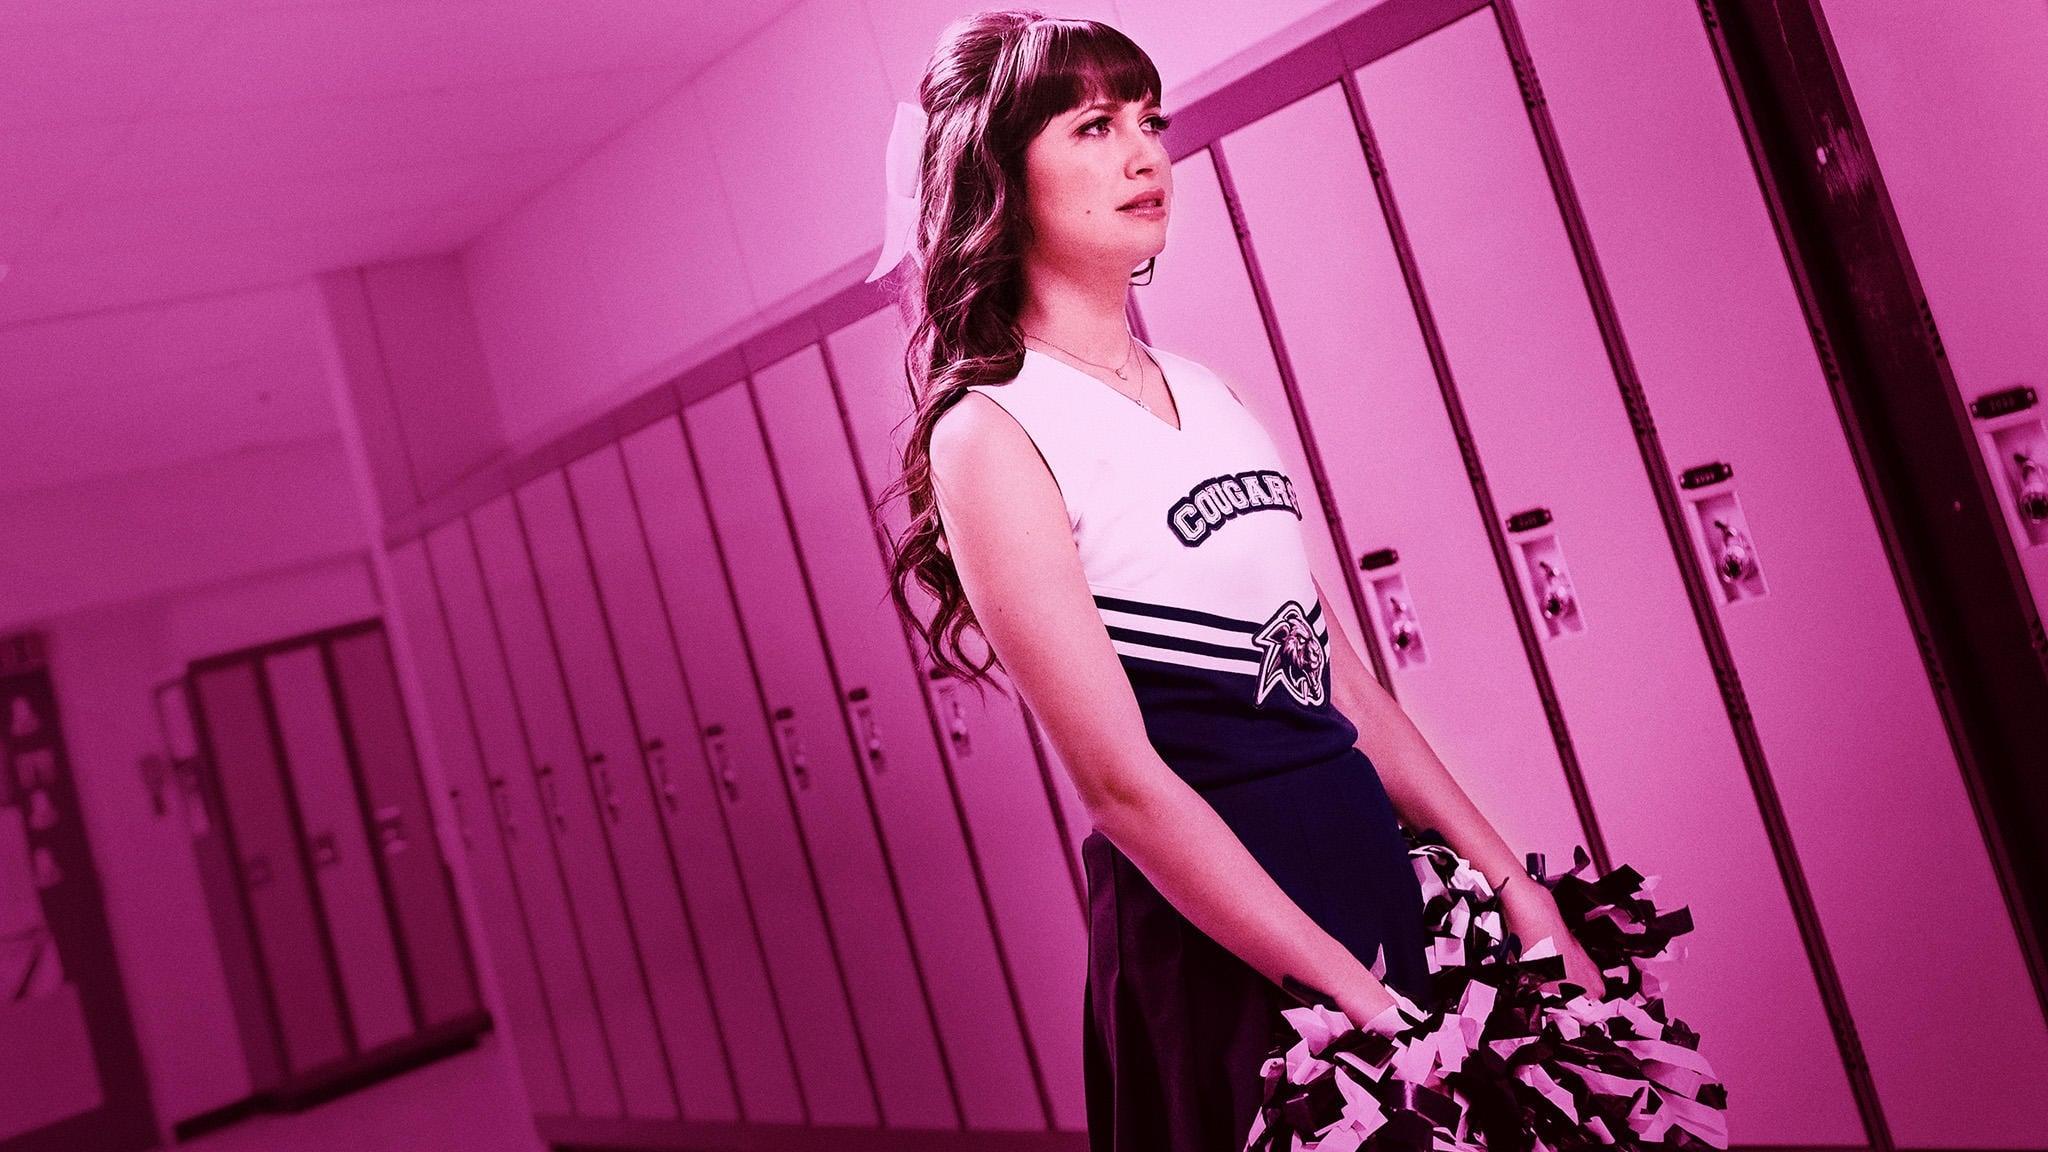 Identity Theft of a Cheerleader backdrop